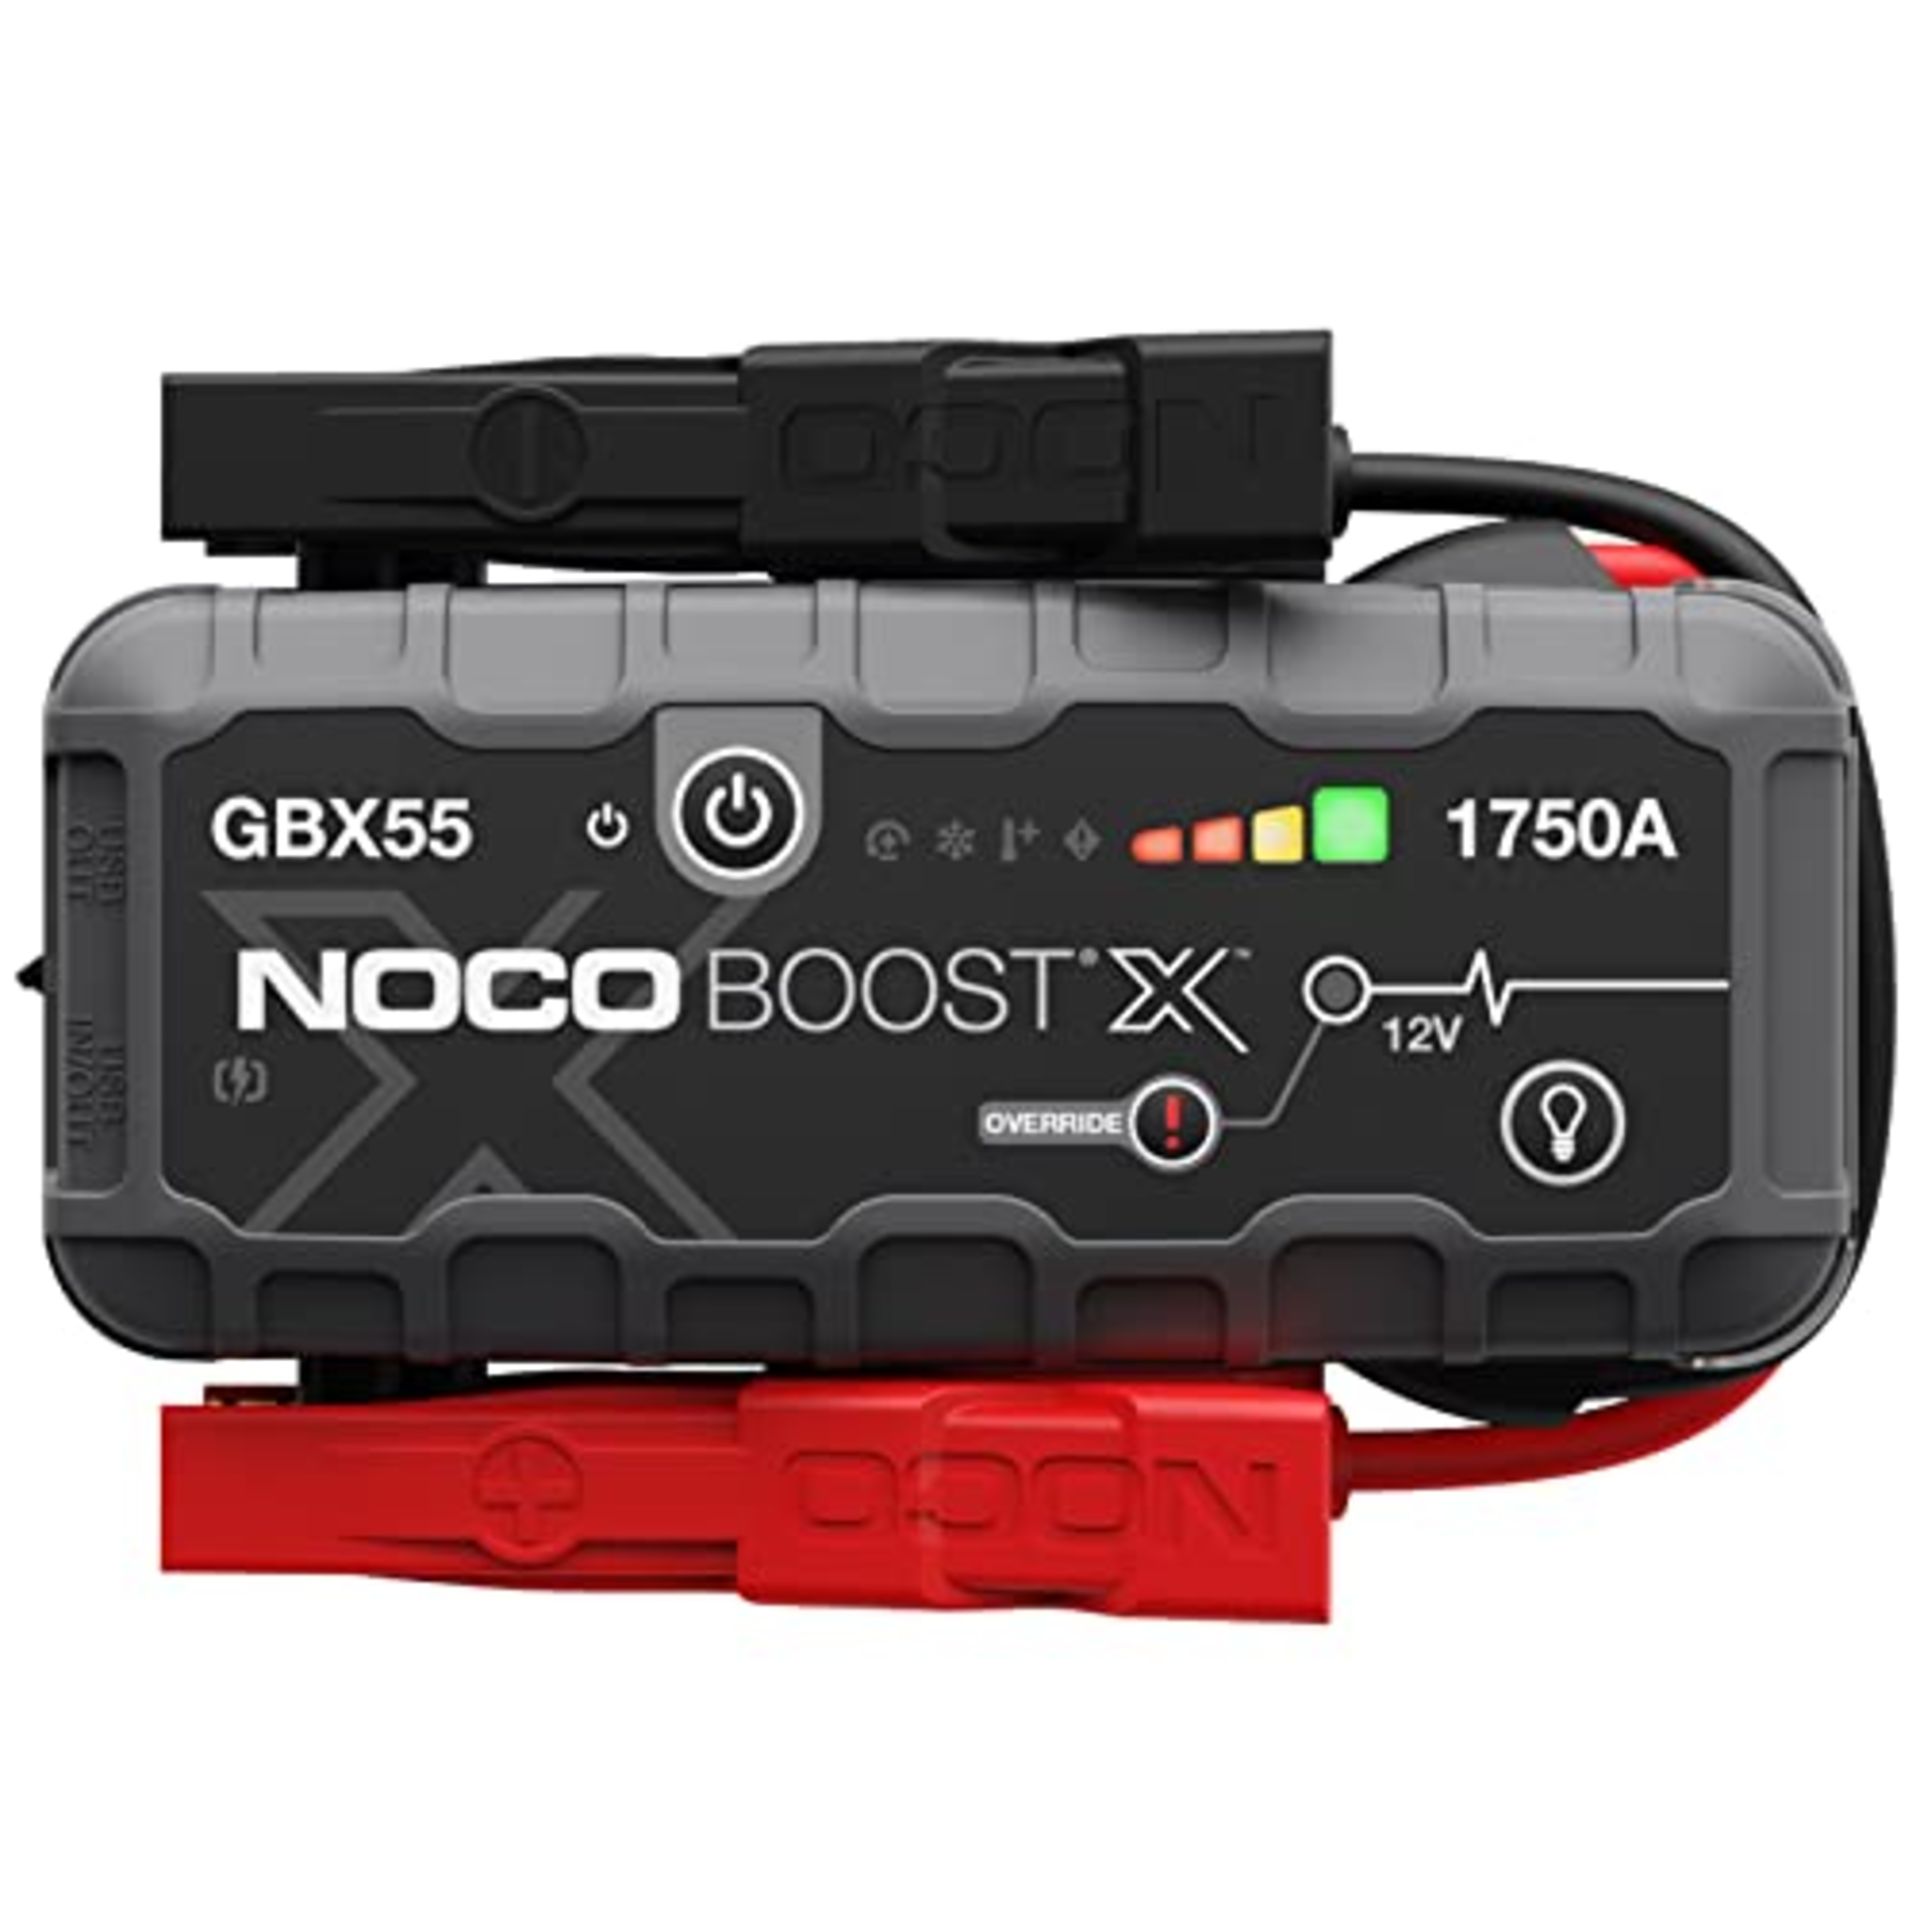 RRP £166.00 NOCO Boost X GBX55 12V UltraSafe Portable Lithium Car Jump Starter, Heavy-Duty Battery